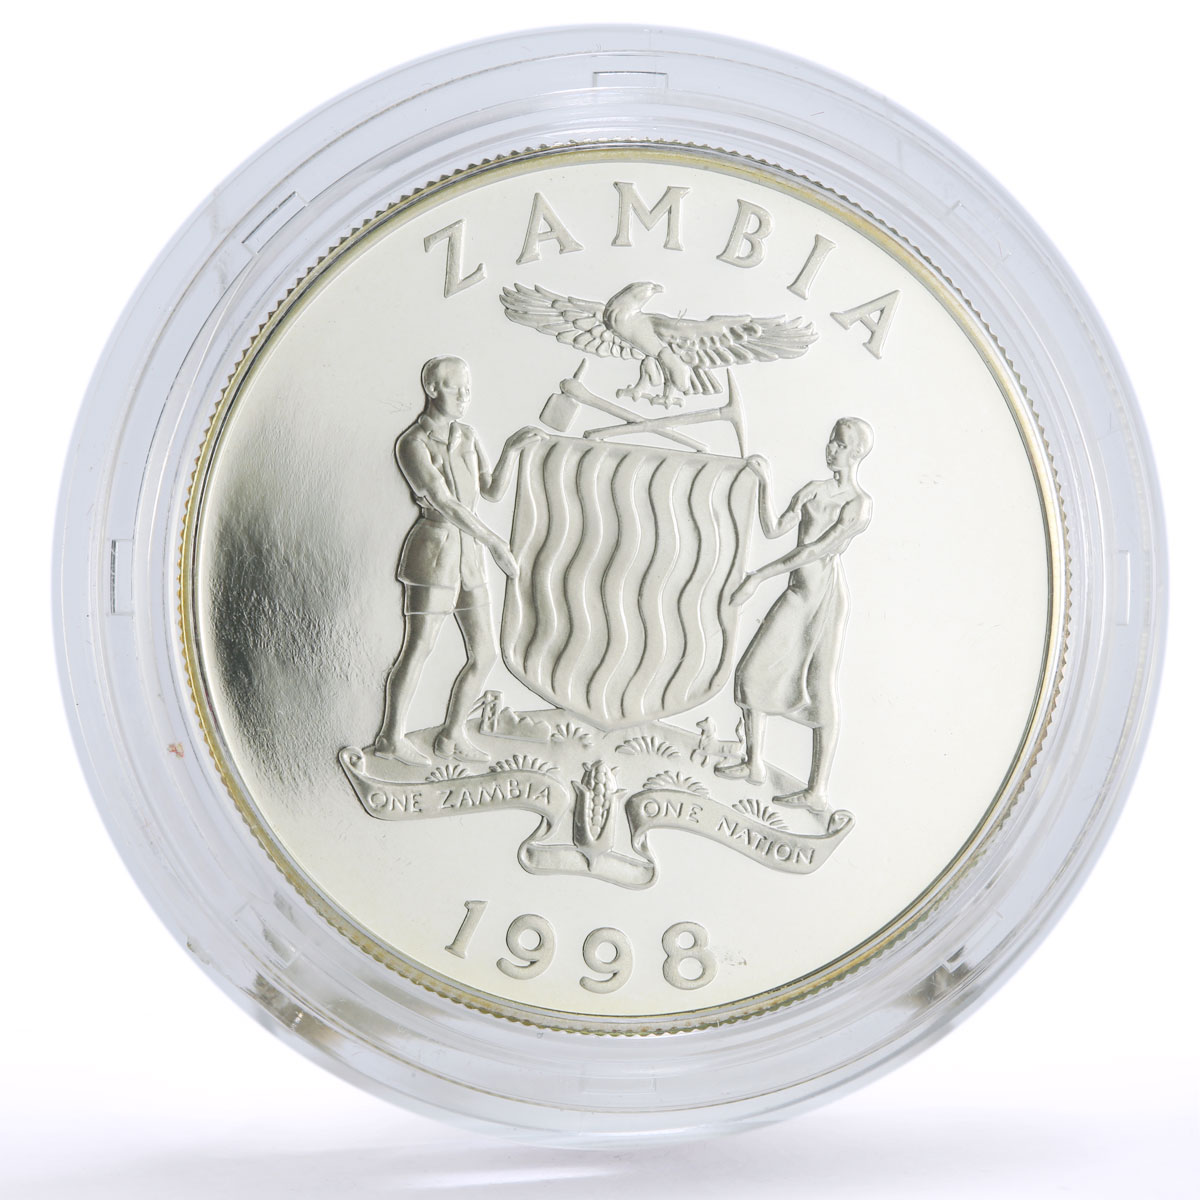 Zambia 100 kwacha Conservation Wildlife Giraffe Fauna proof silver coin 1998